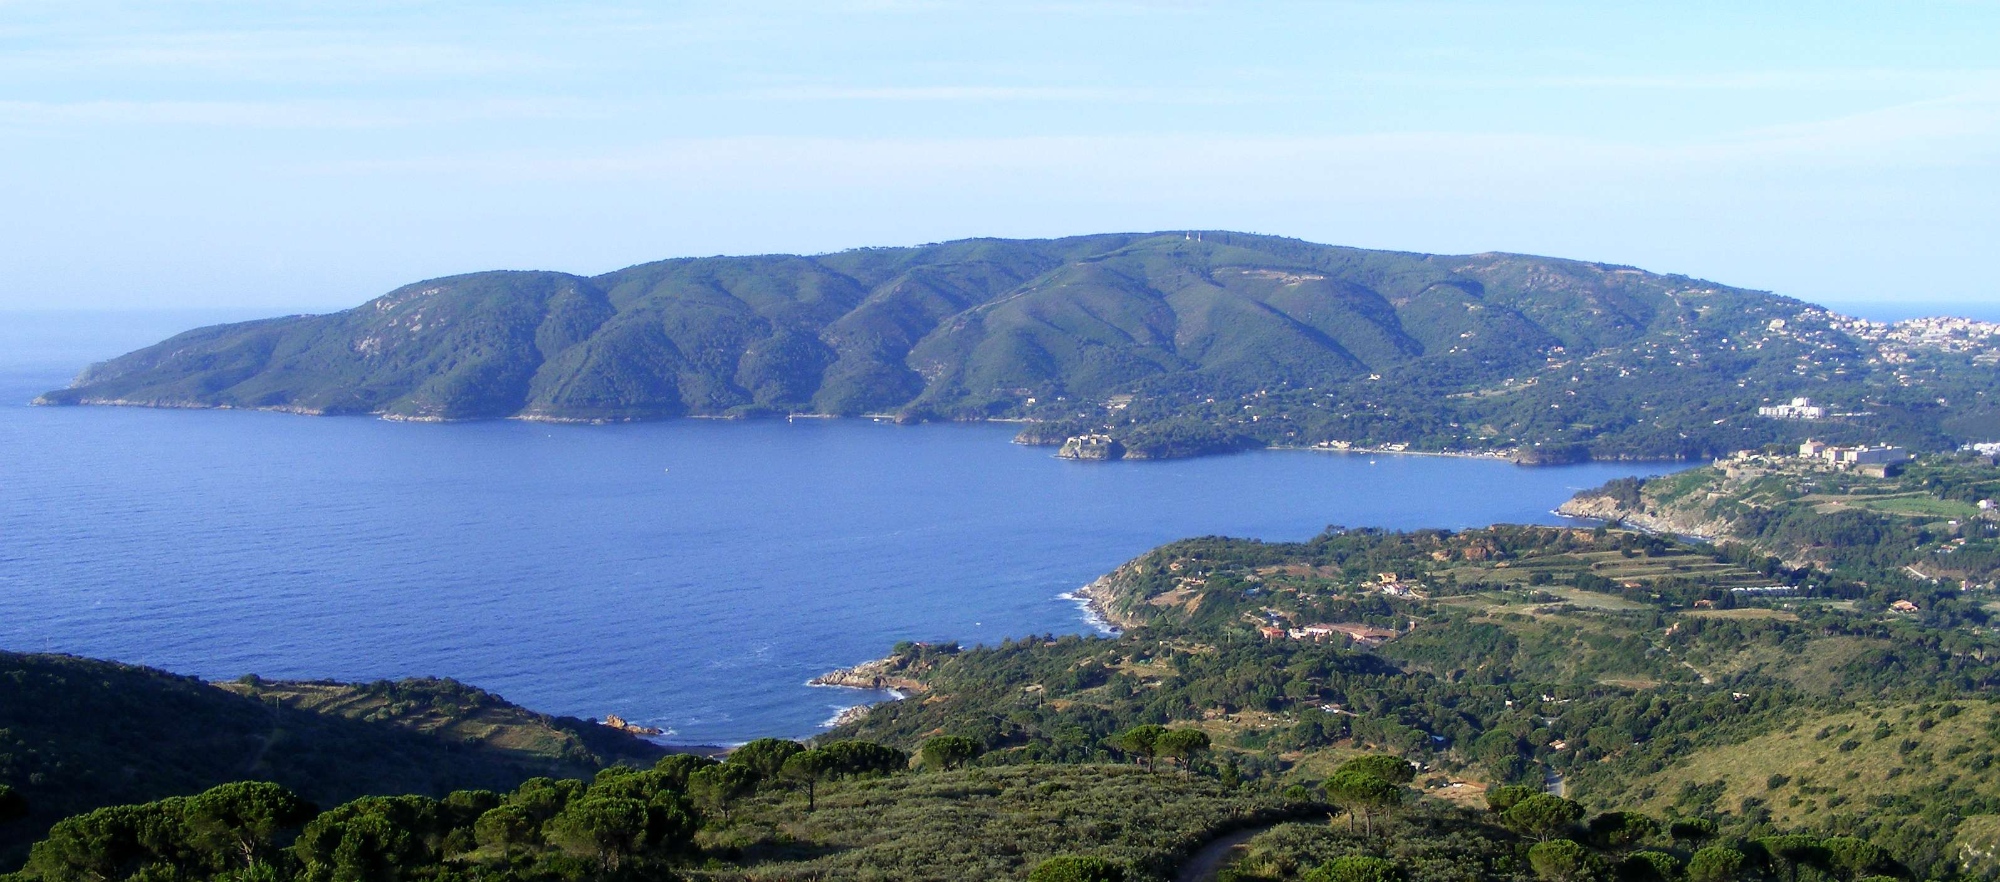 Monte Calamita, Elba island